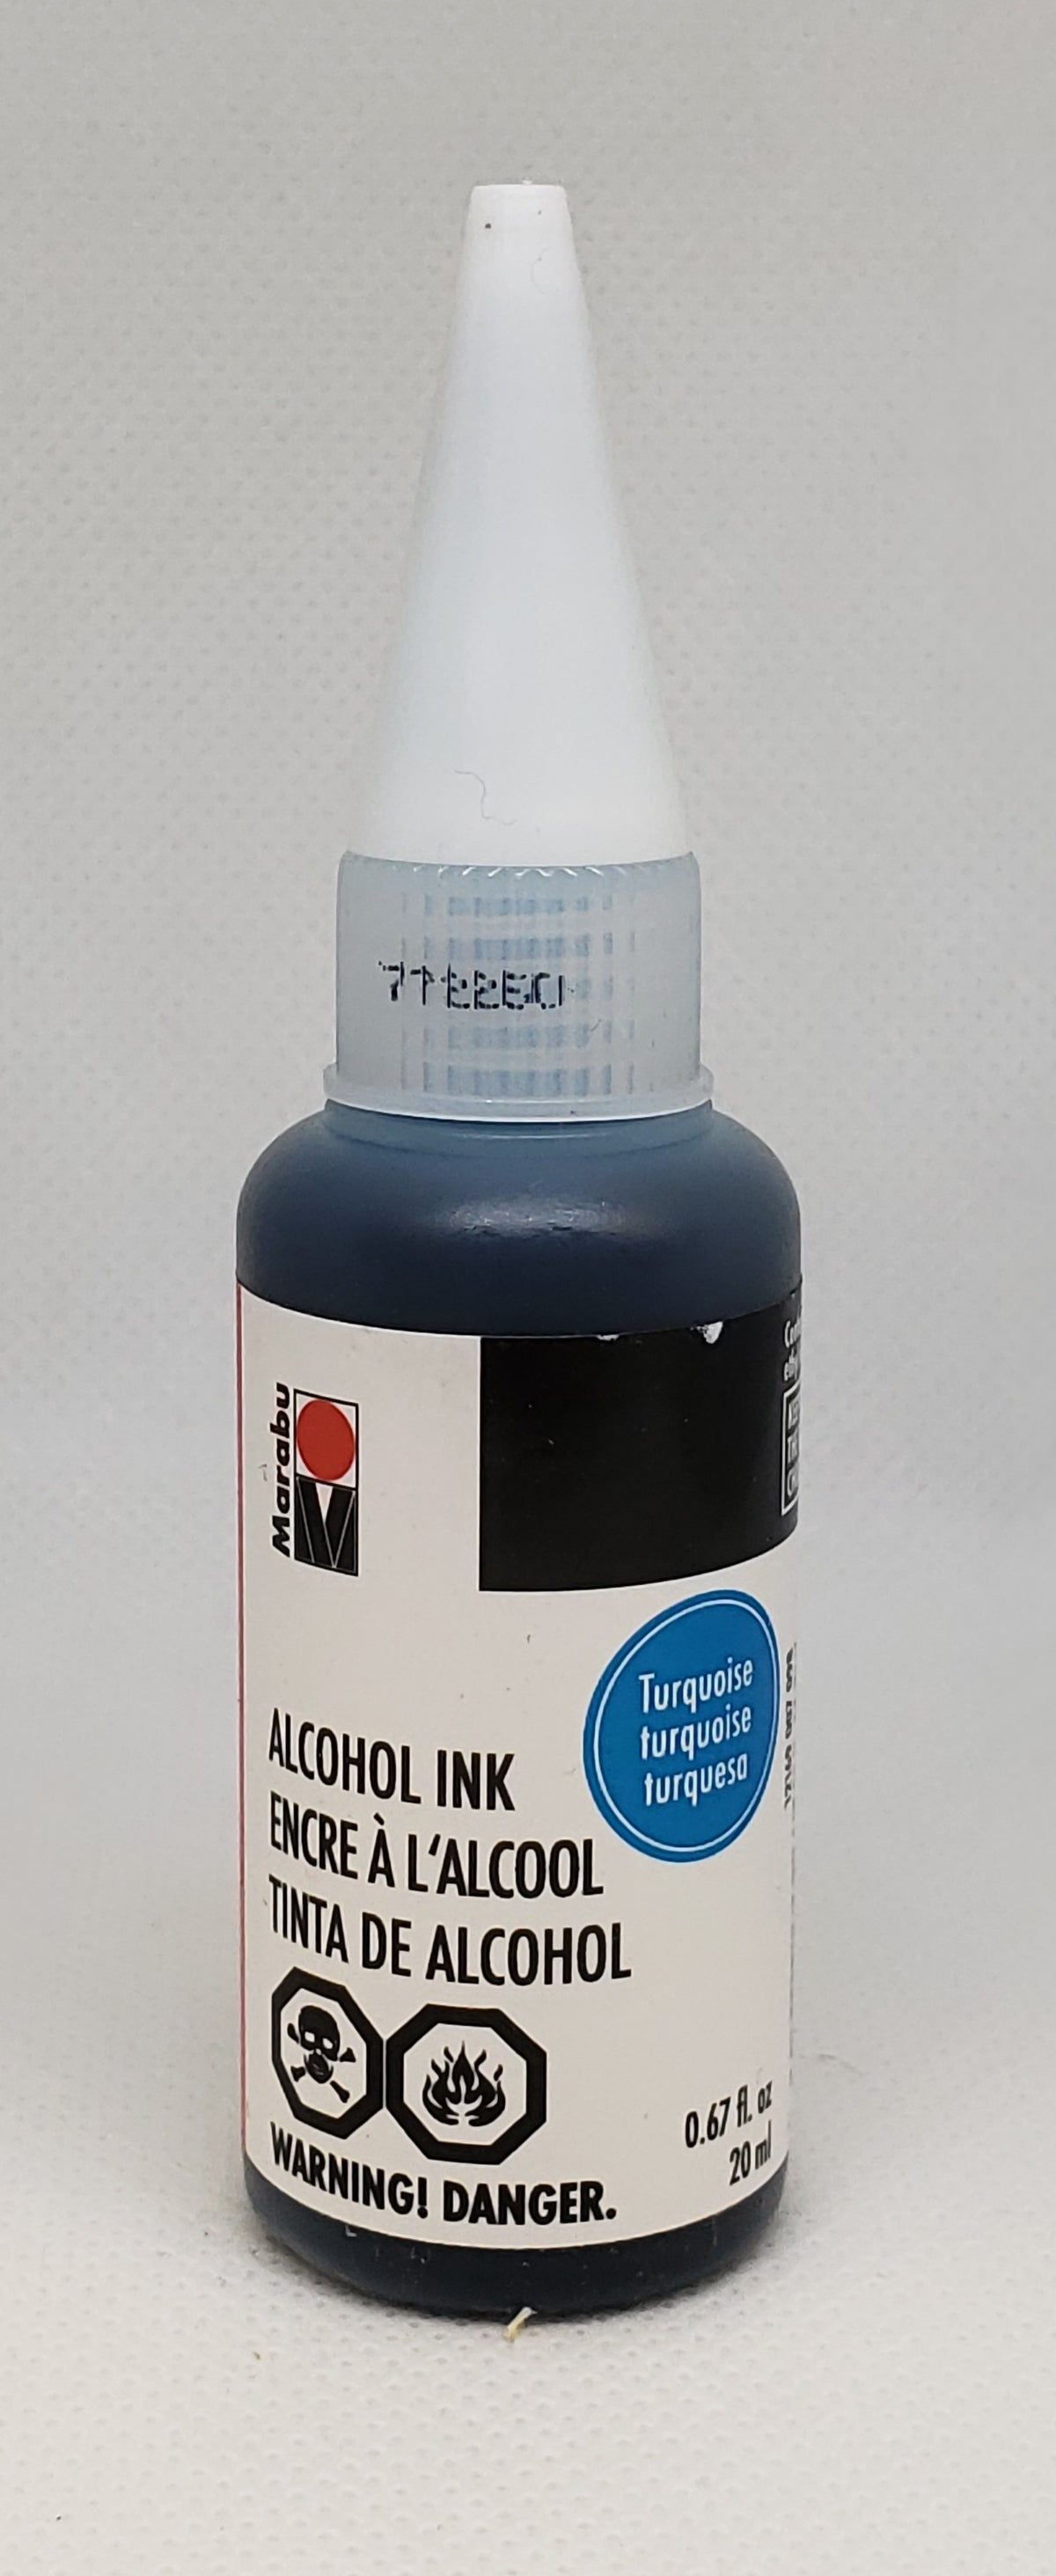 Marabu Alcohol Inks with Color-Shift Glitter